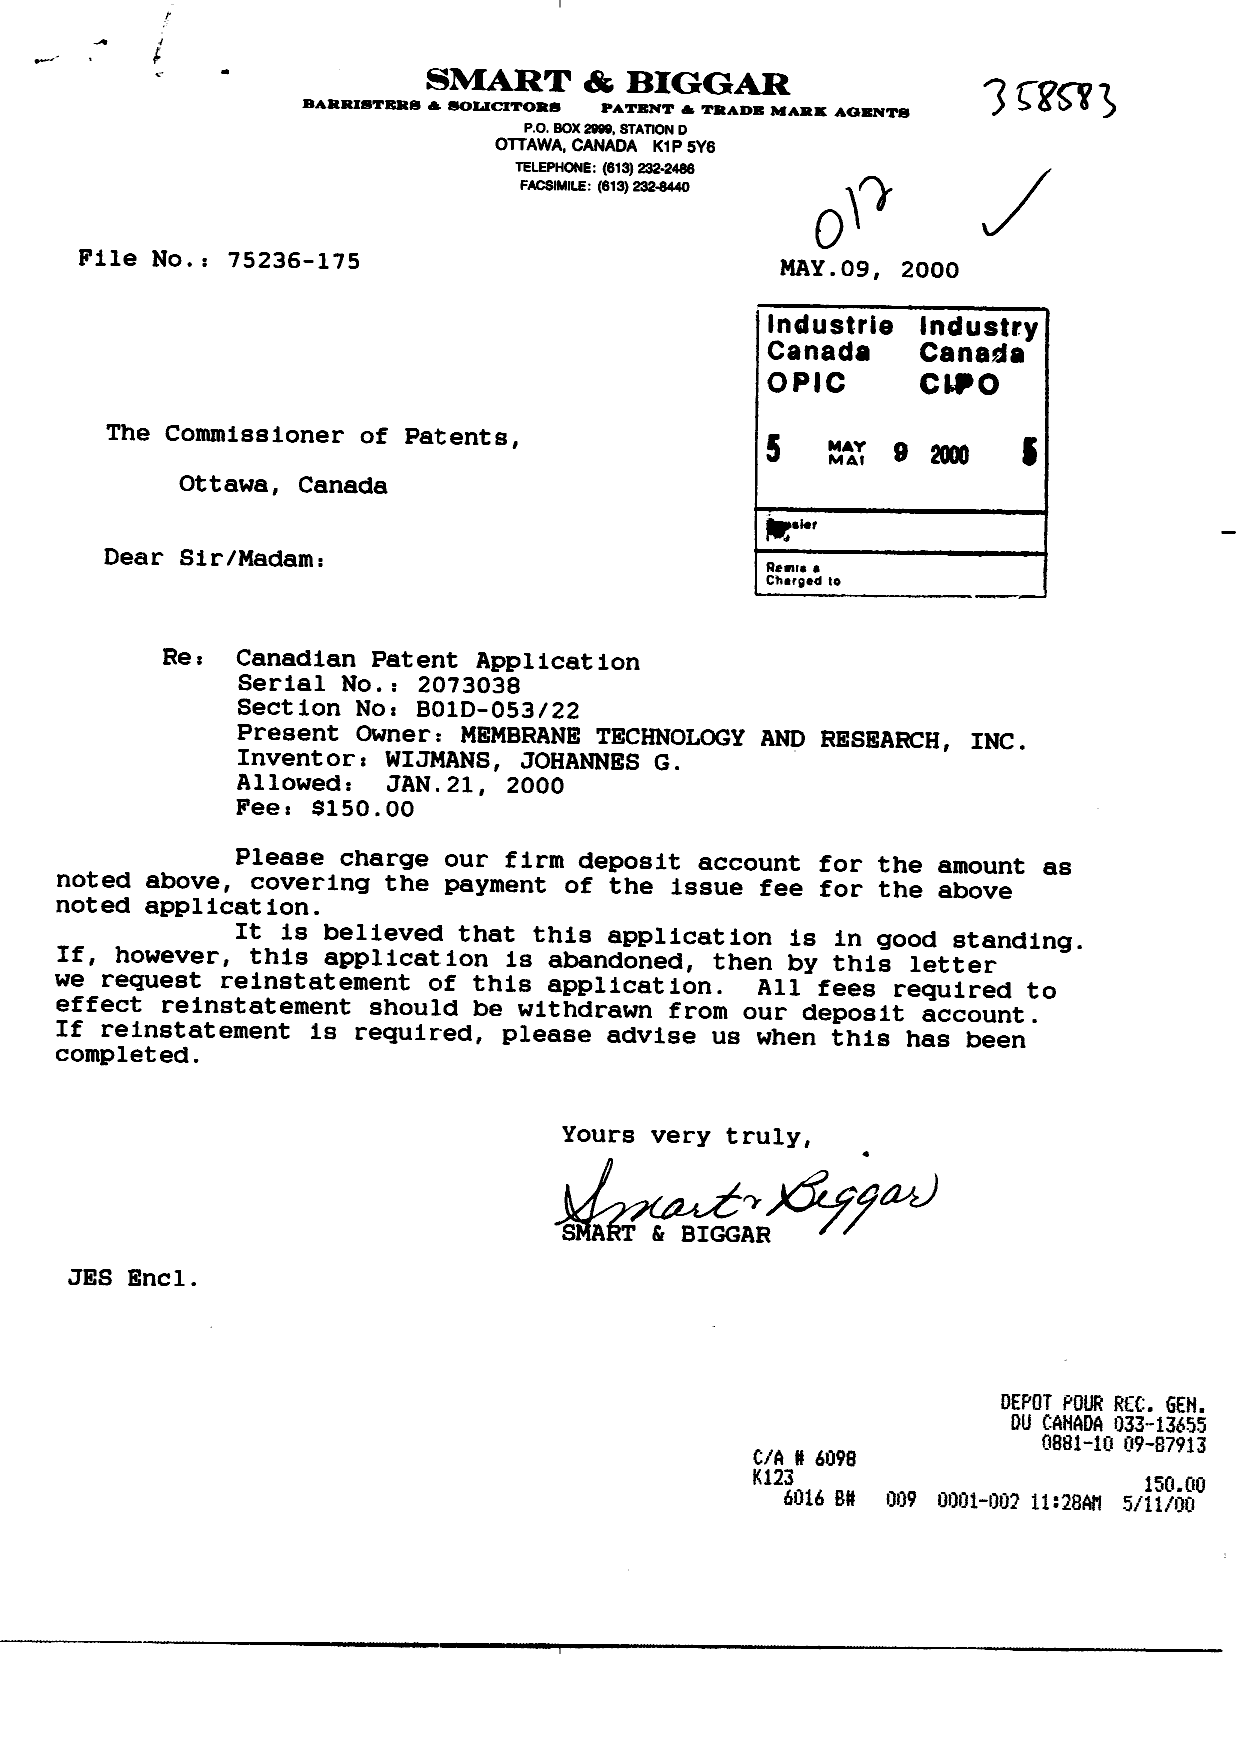 Canadian Patent Document 2073038. Correspondence 20000509. Image 1 of 2